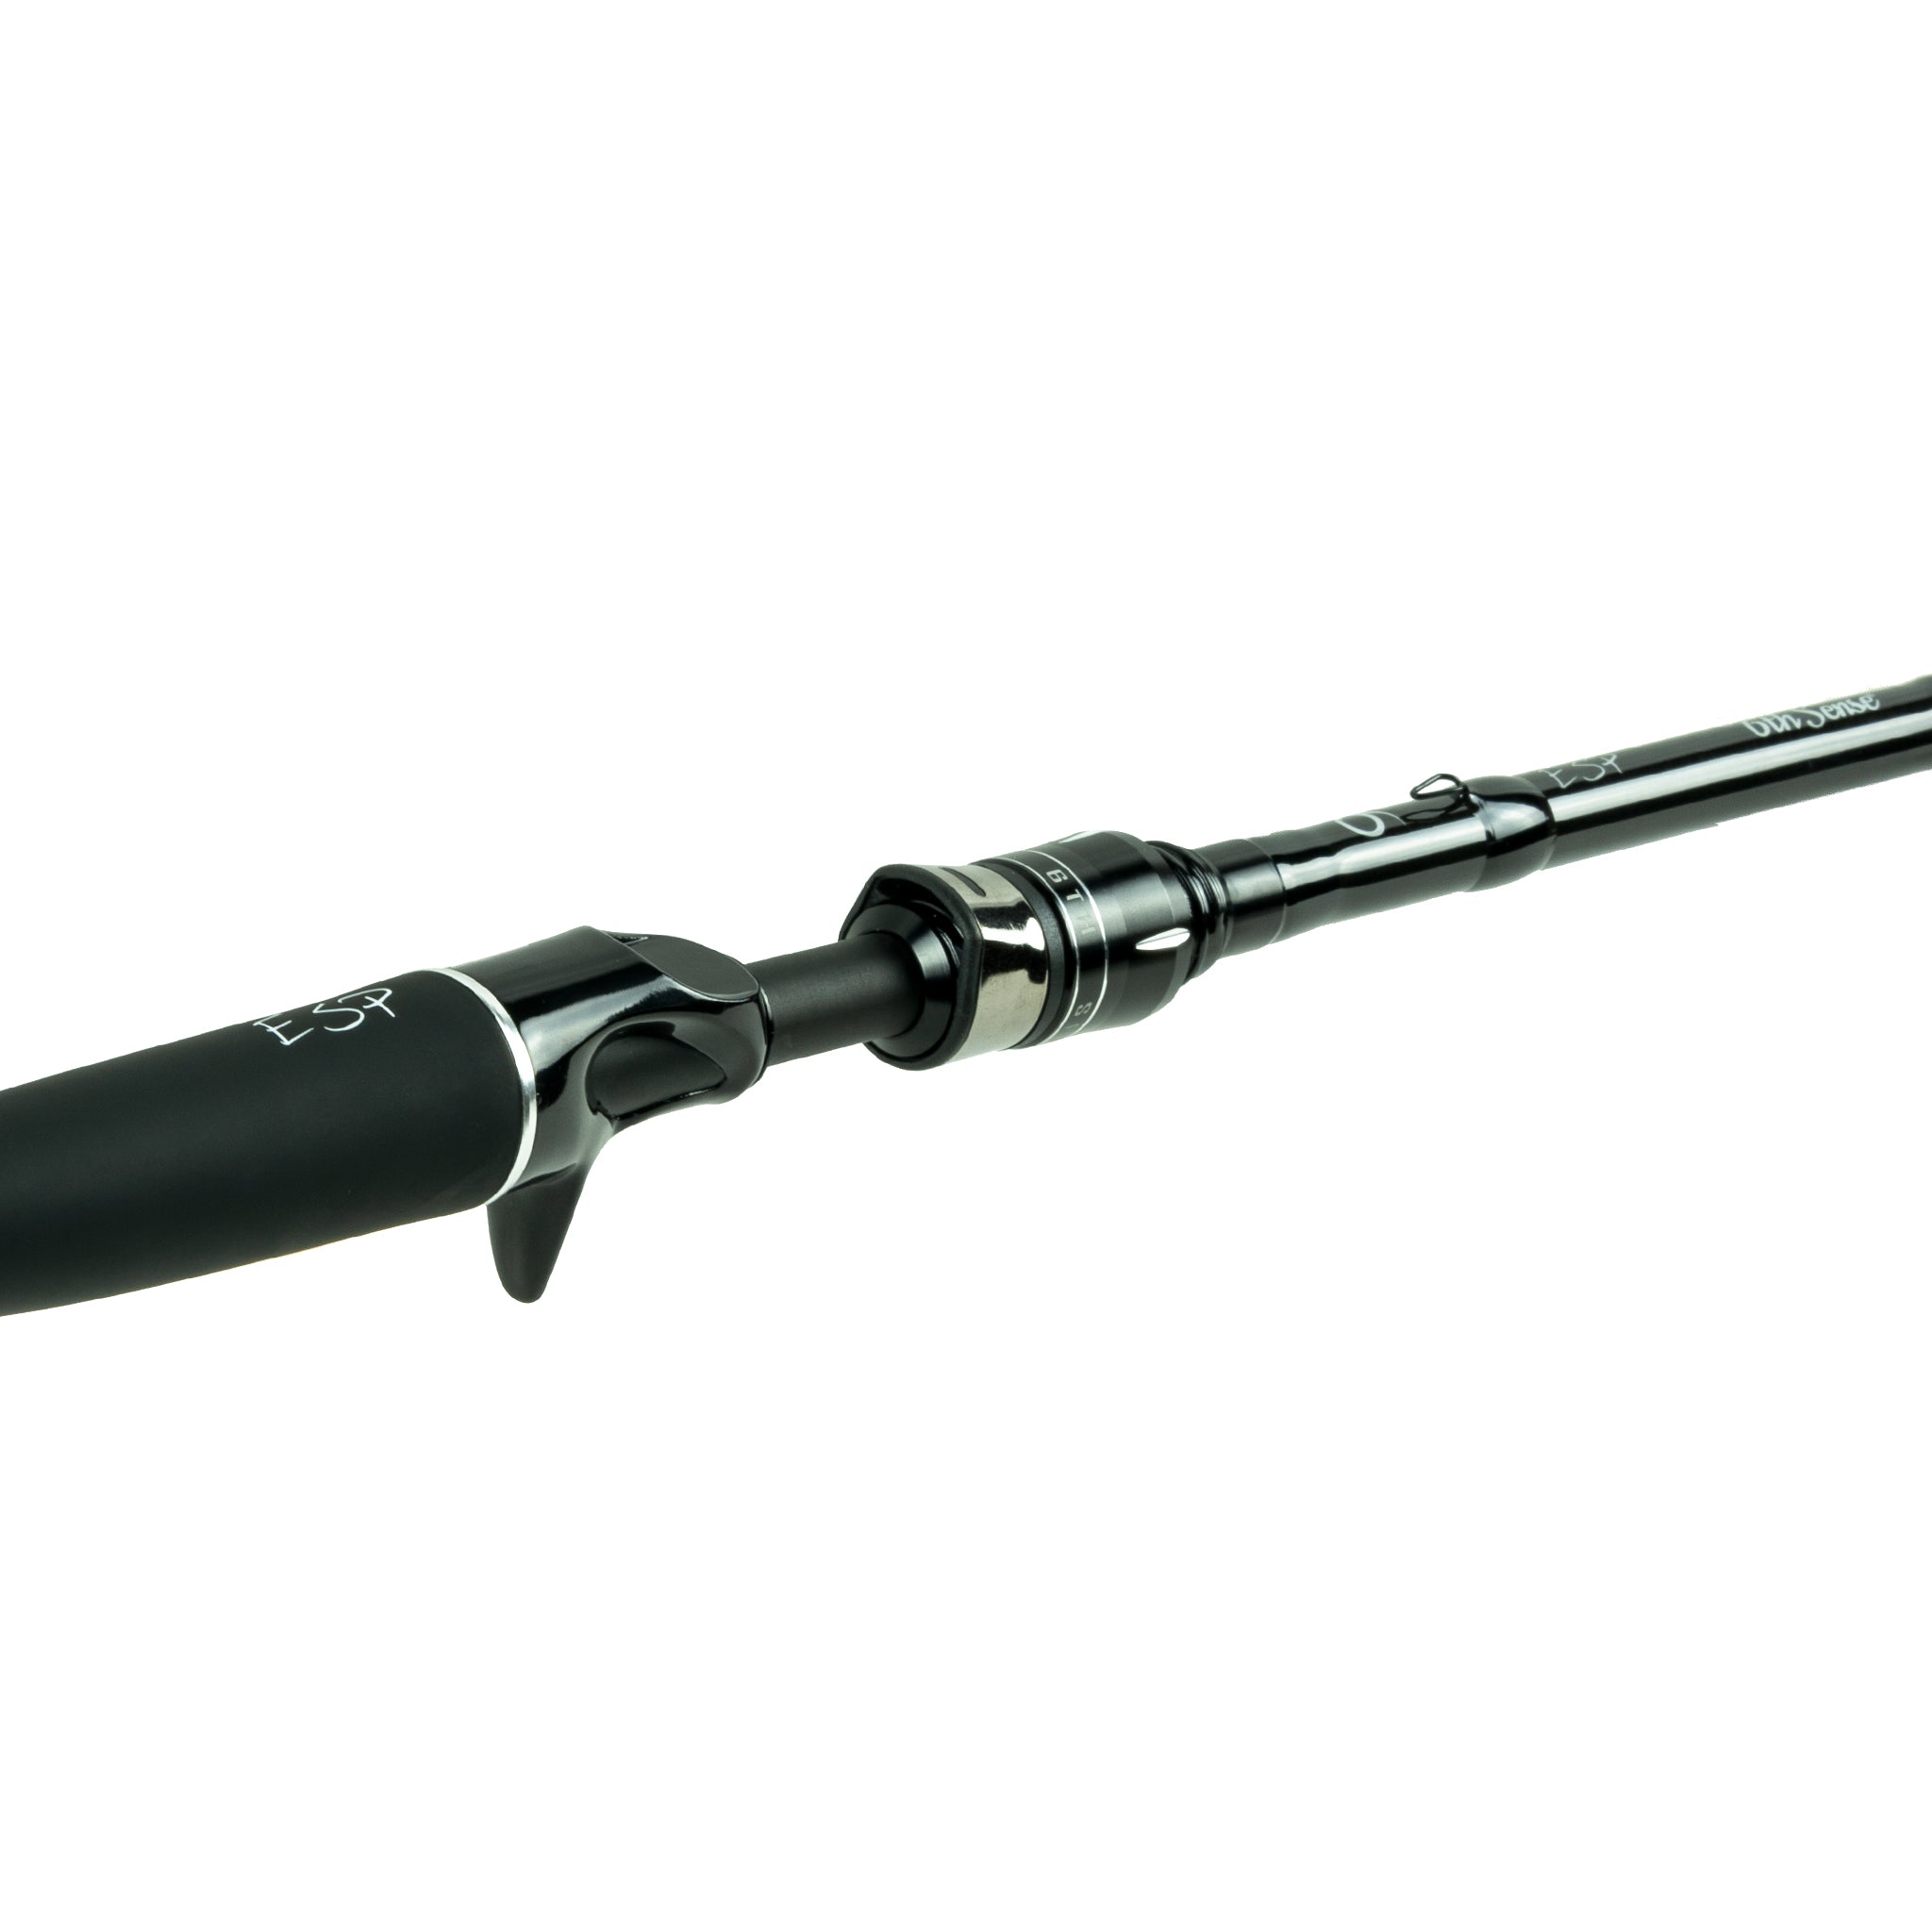 6th Sense Fishing - ESP Series Casting Rod - 7'3 Extra Heavy, Fast